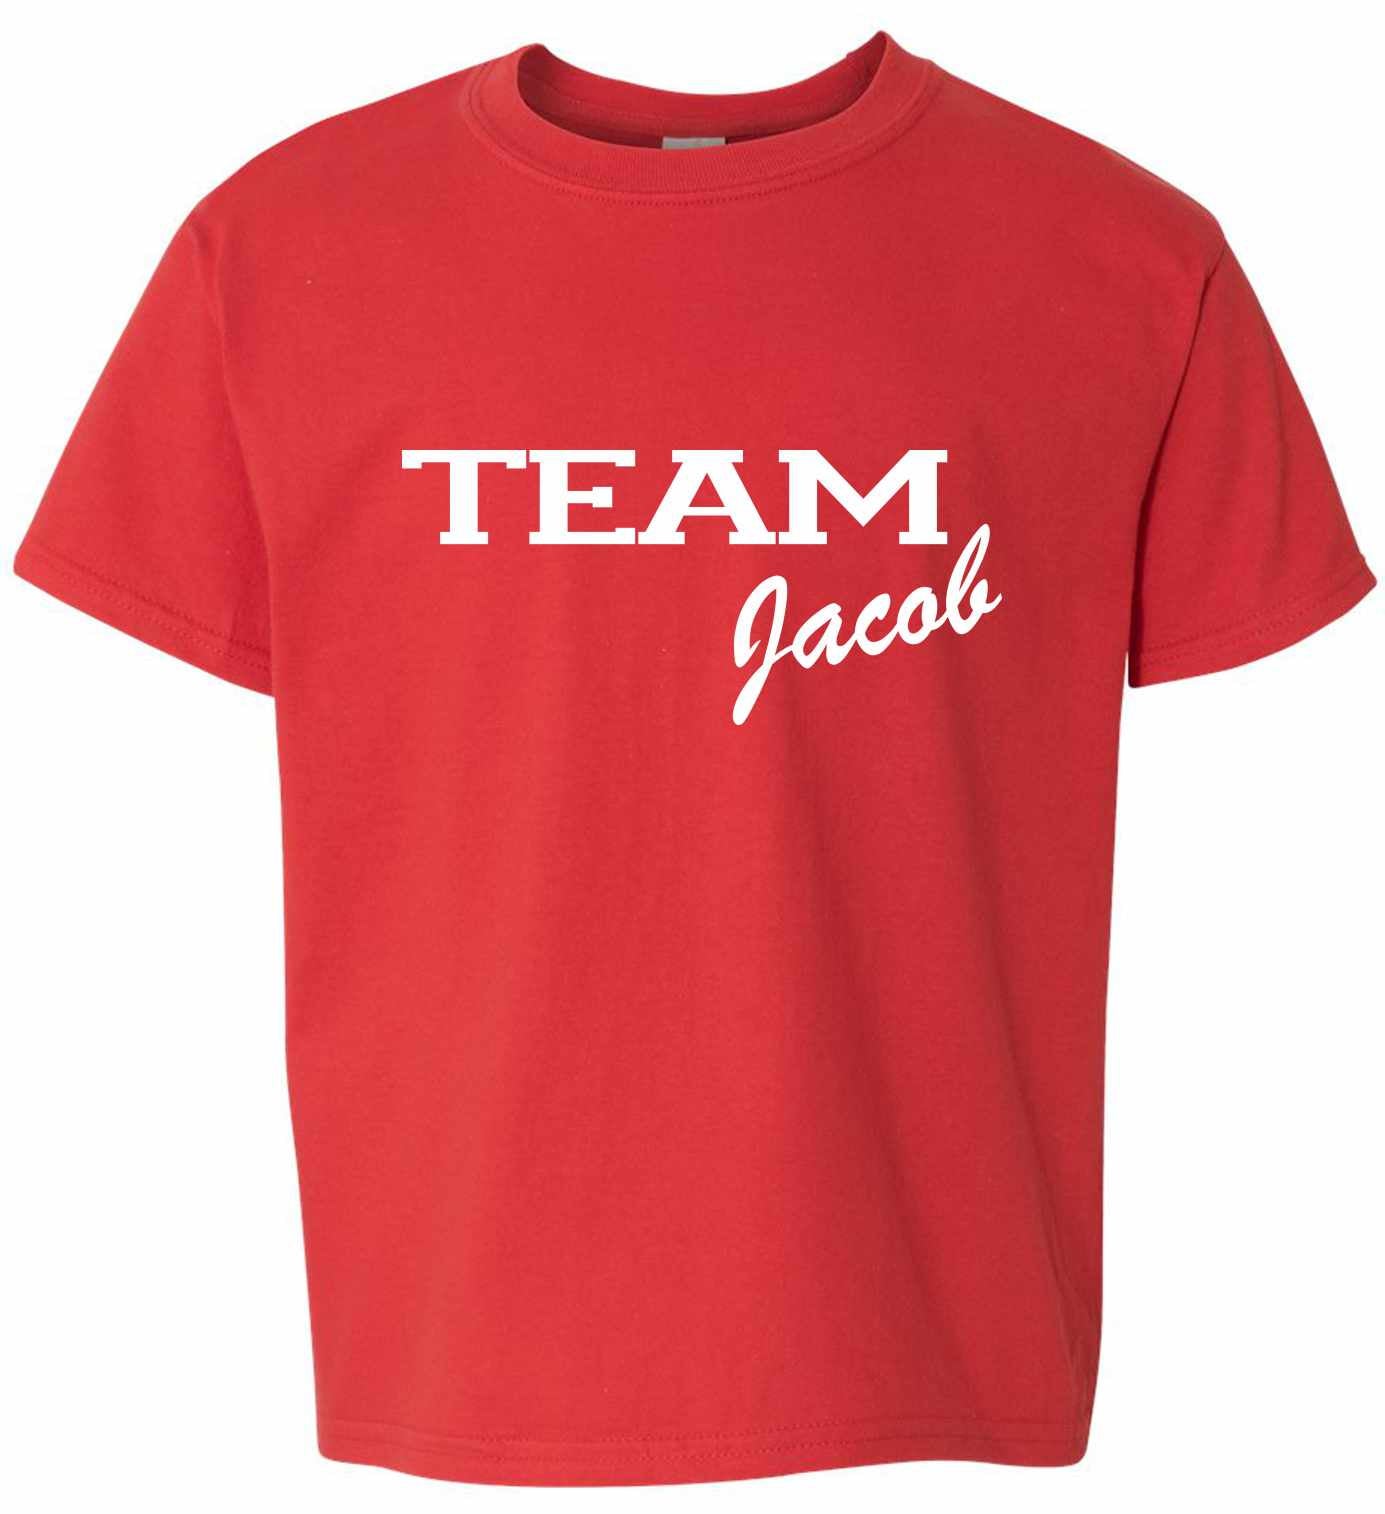 TEAM JACOB on Kids T-Shirt (#257-201)